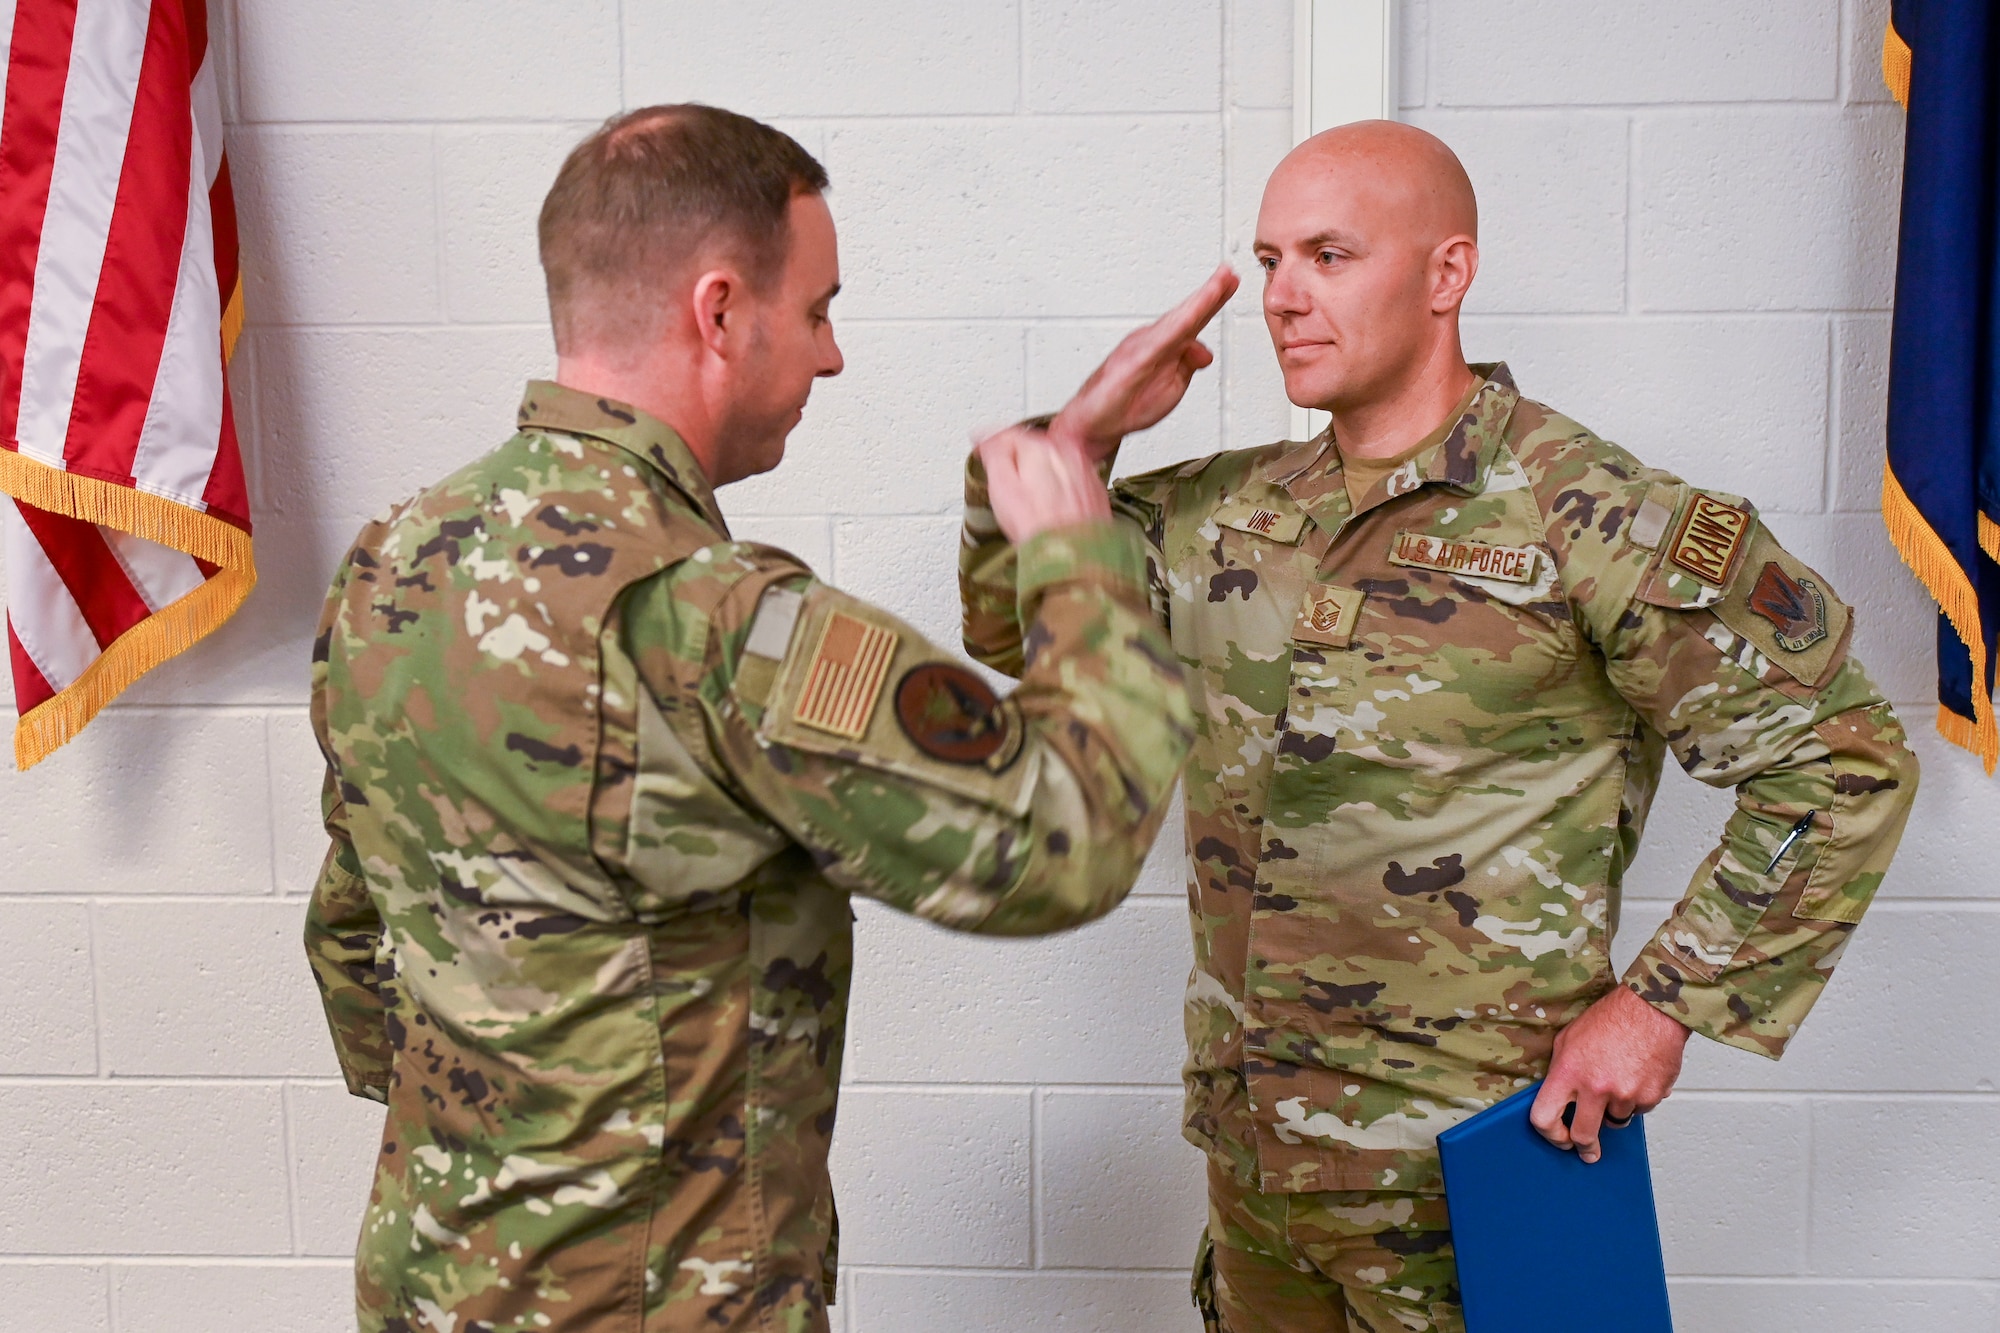 Master Sgt. Chris Vine, 245th ATCS, receives Bronze Star Medal